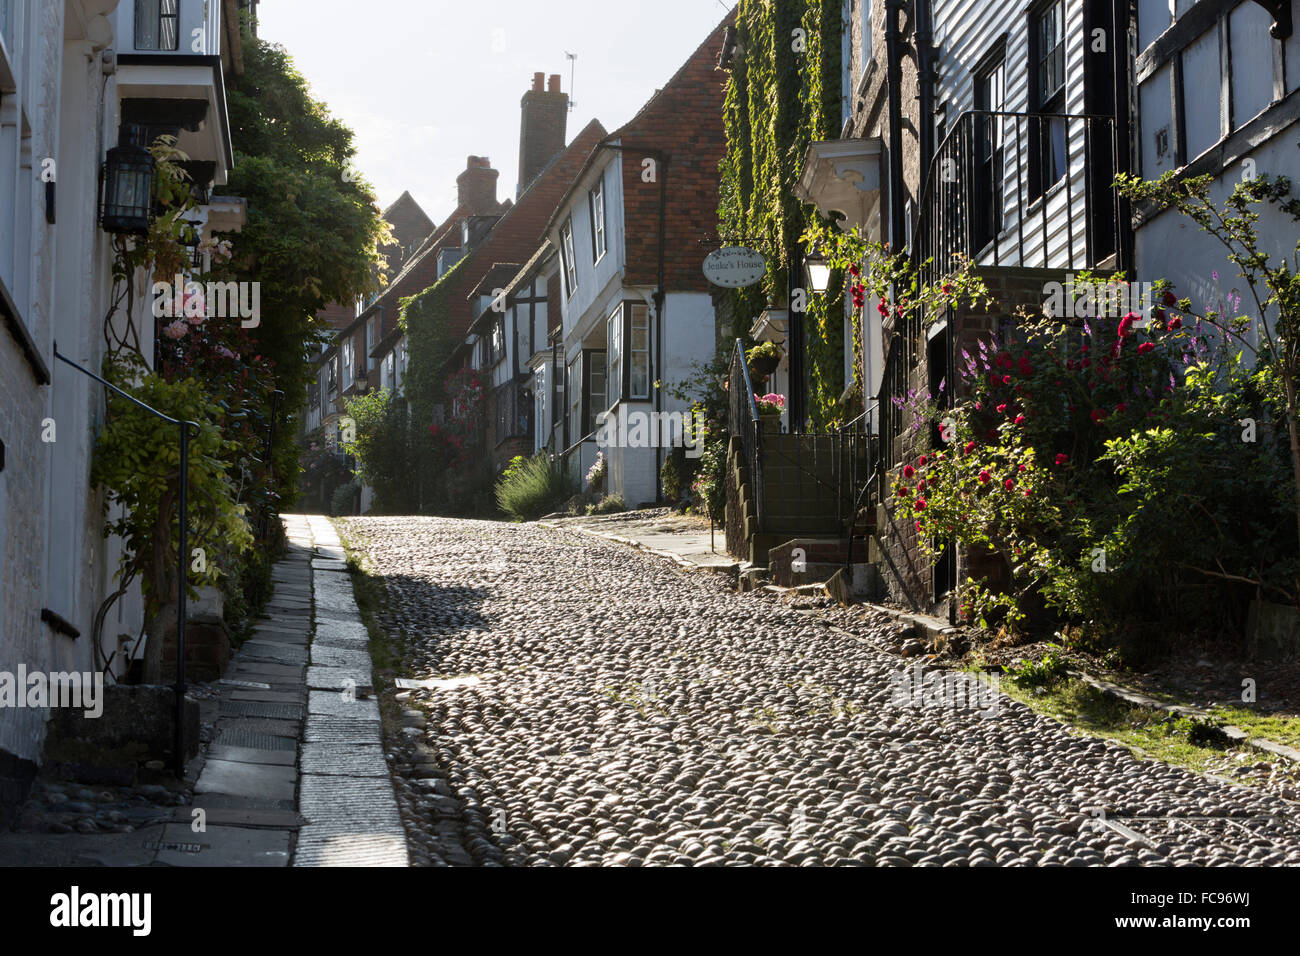 Cobblestone street and old cottages, Mermaid Street, Rye, East Sussex, England, United Kingdom, Europe Stock Photo